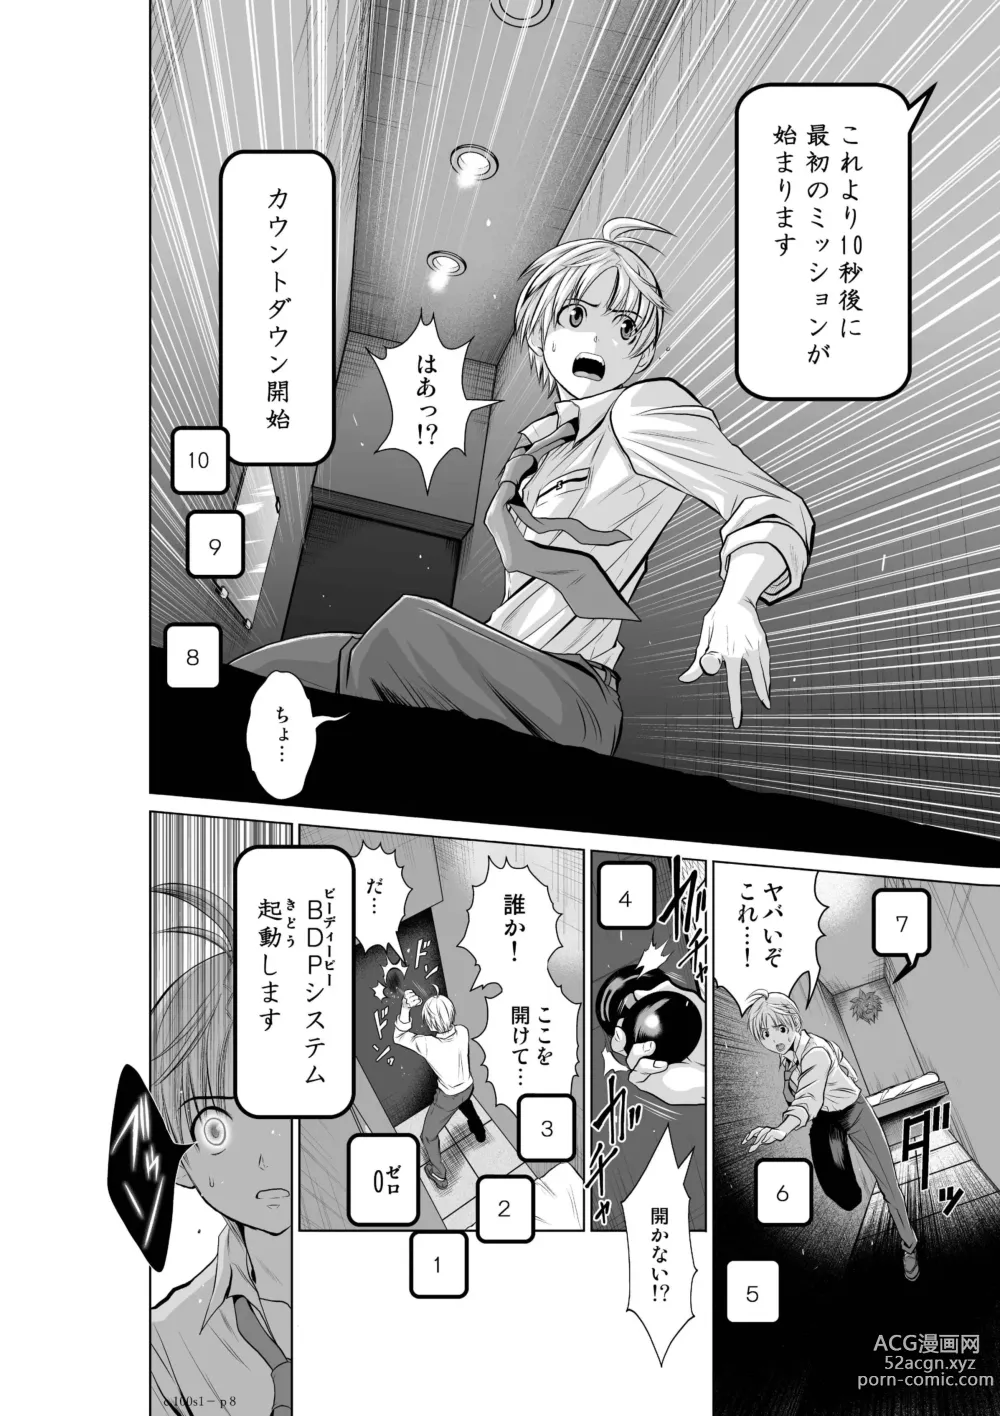 Page 8 of manga Chijou Hyakkai Ch1-30